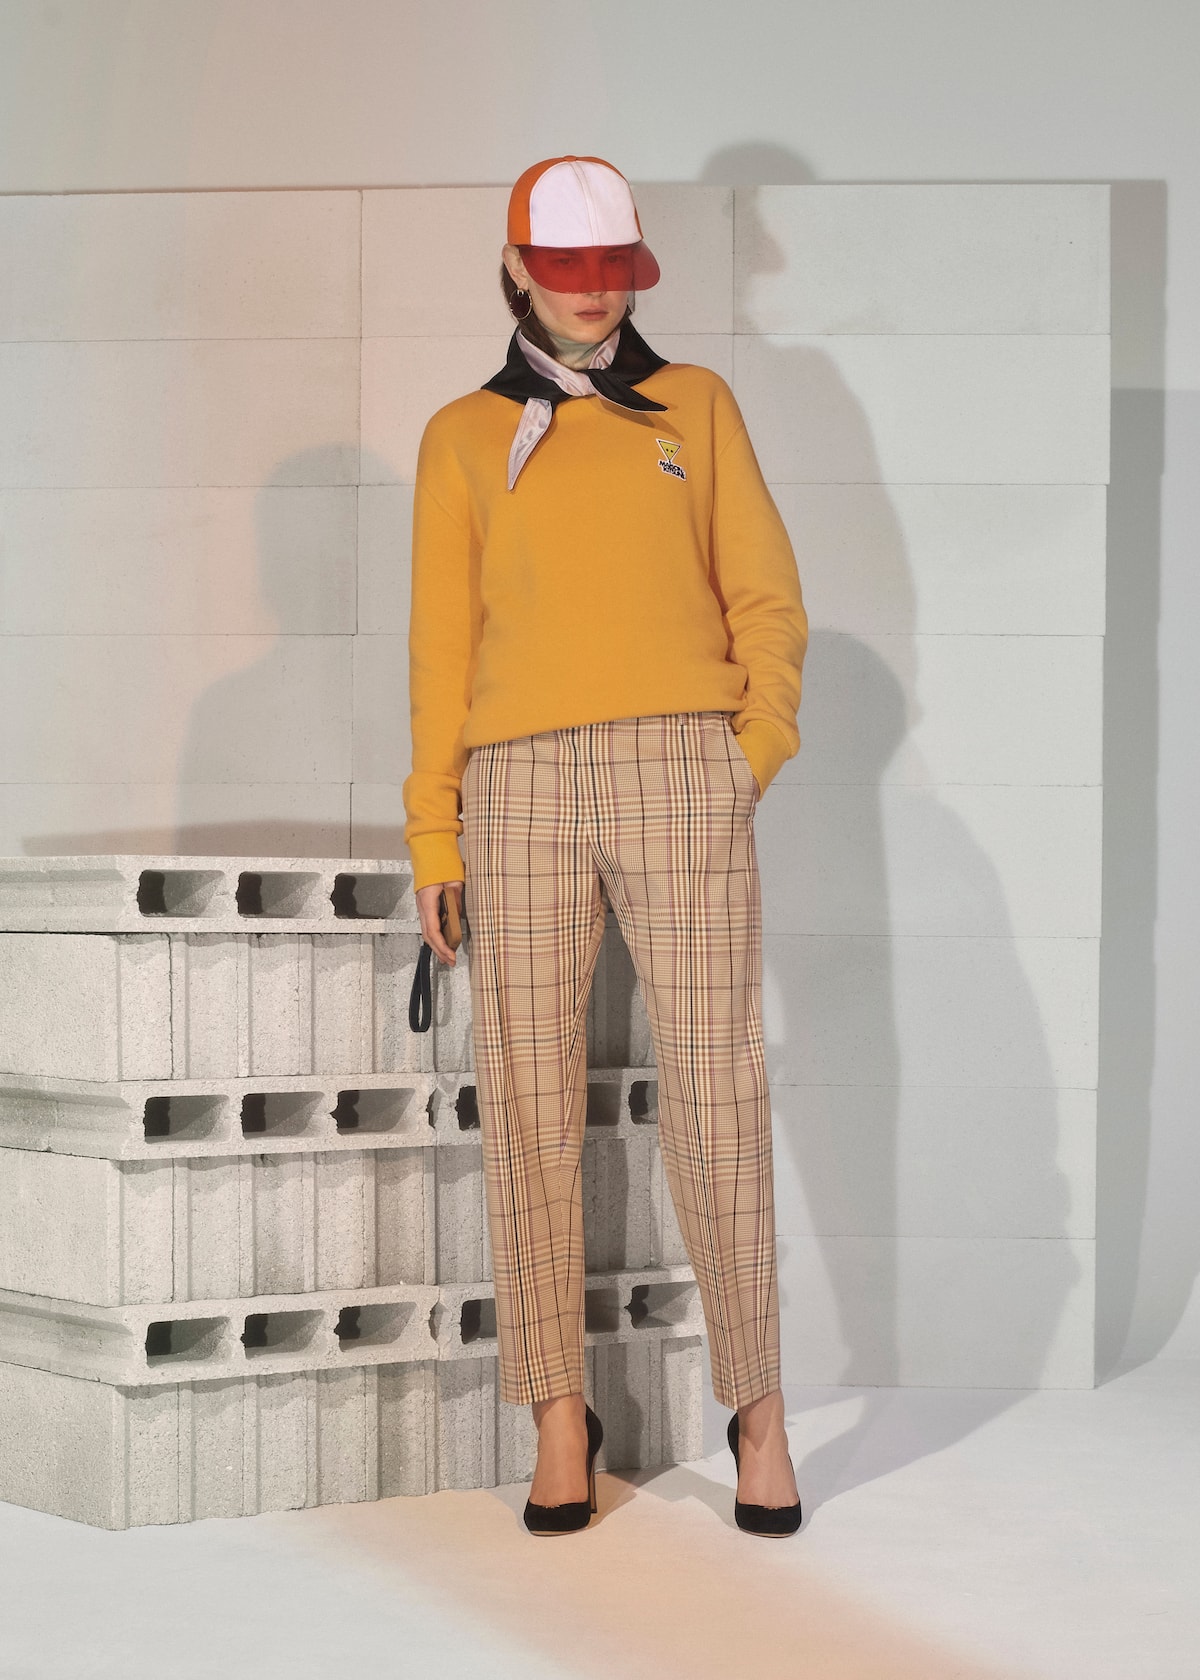 Yuni Ahn & Gildas Loaec Maison Kitsune Interview Fall Winter 2019 Lookbook Paris Fashion Week Men's Boiler room 